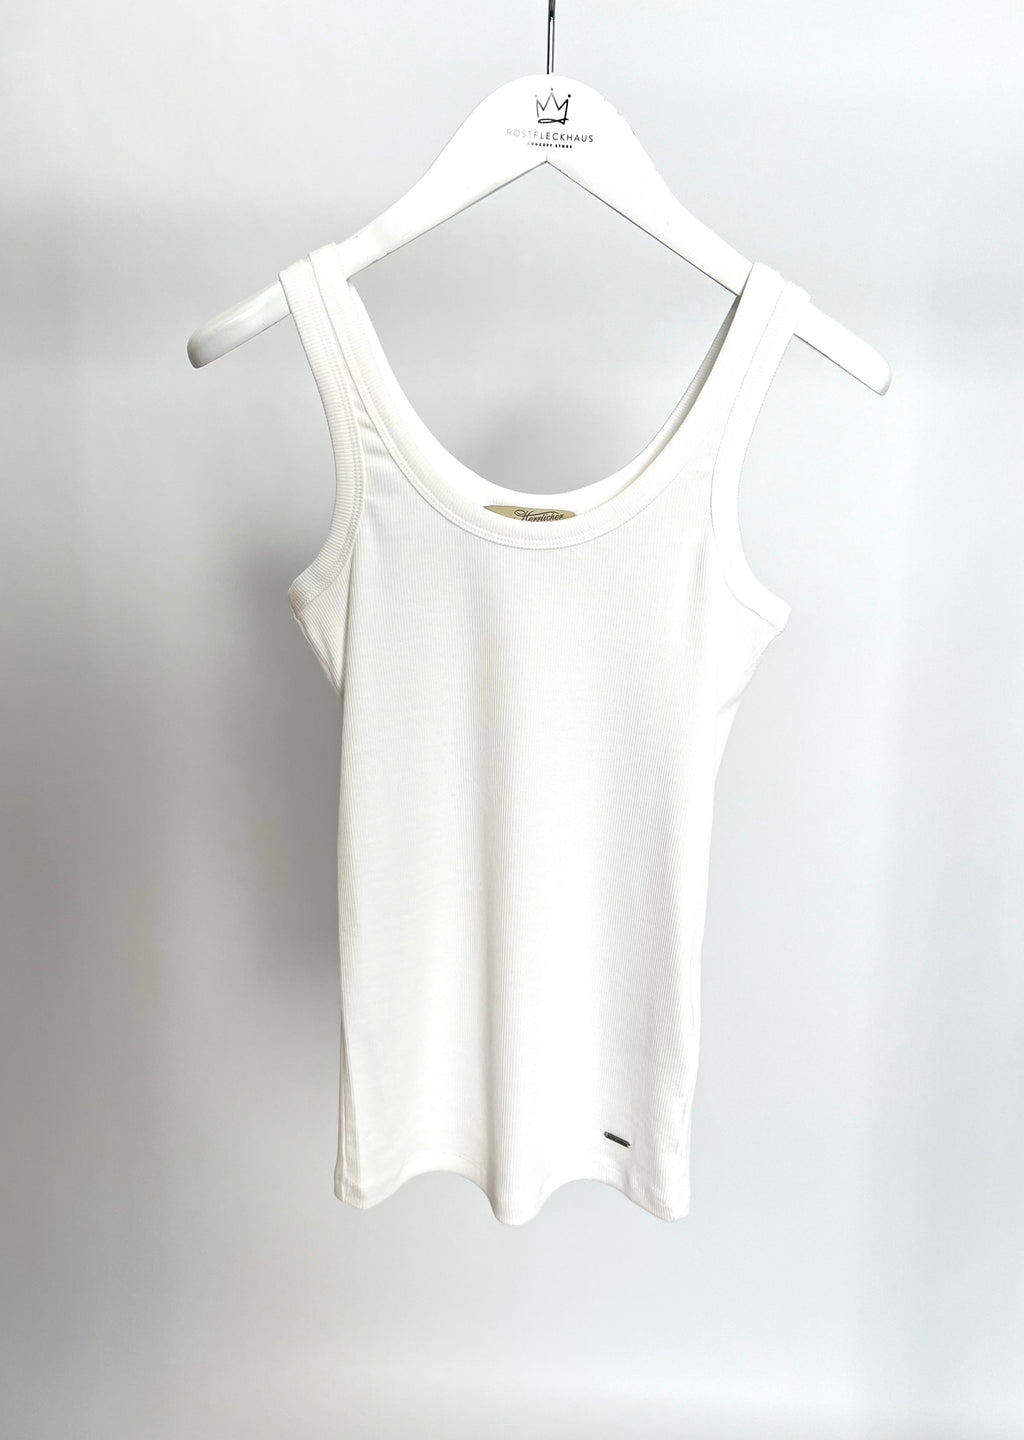 Concept ROSTFLECKHAUS Tops Store – – Shirts &